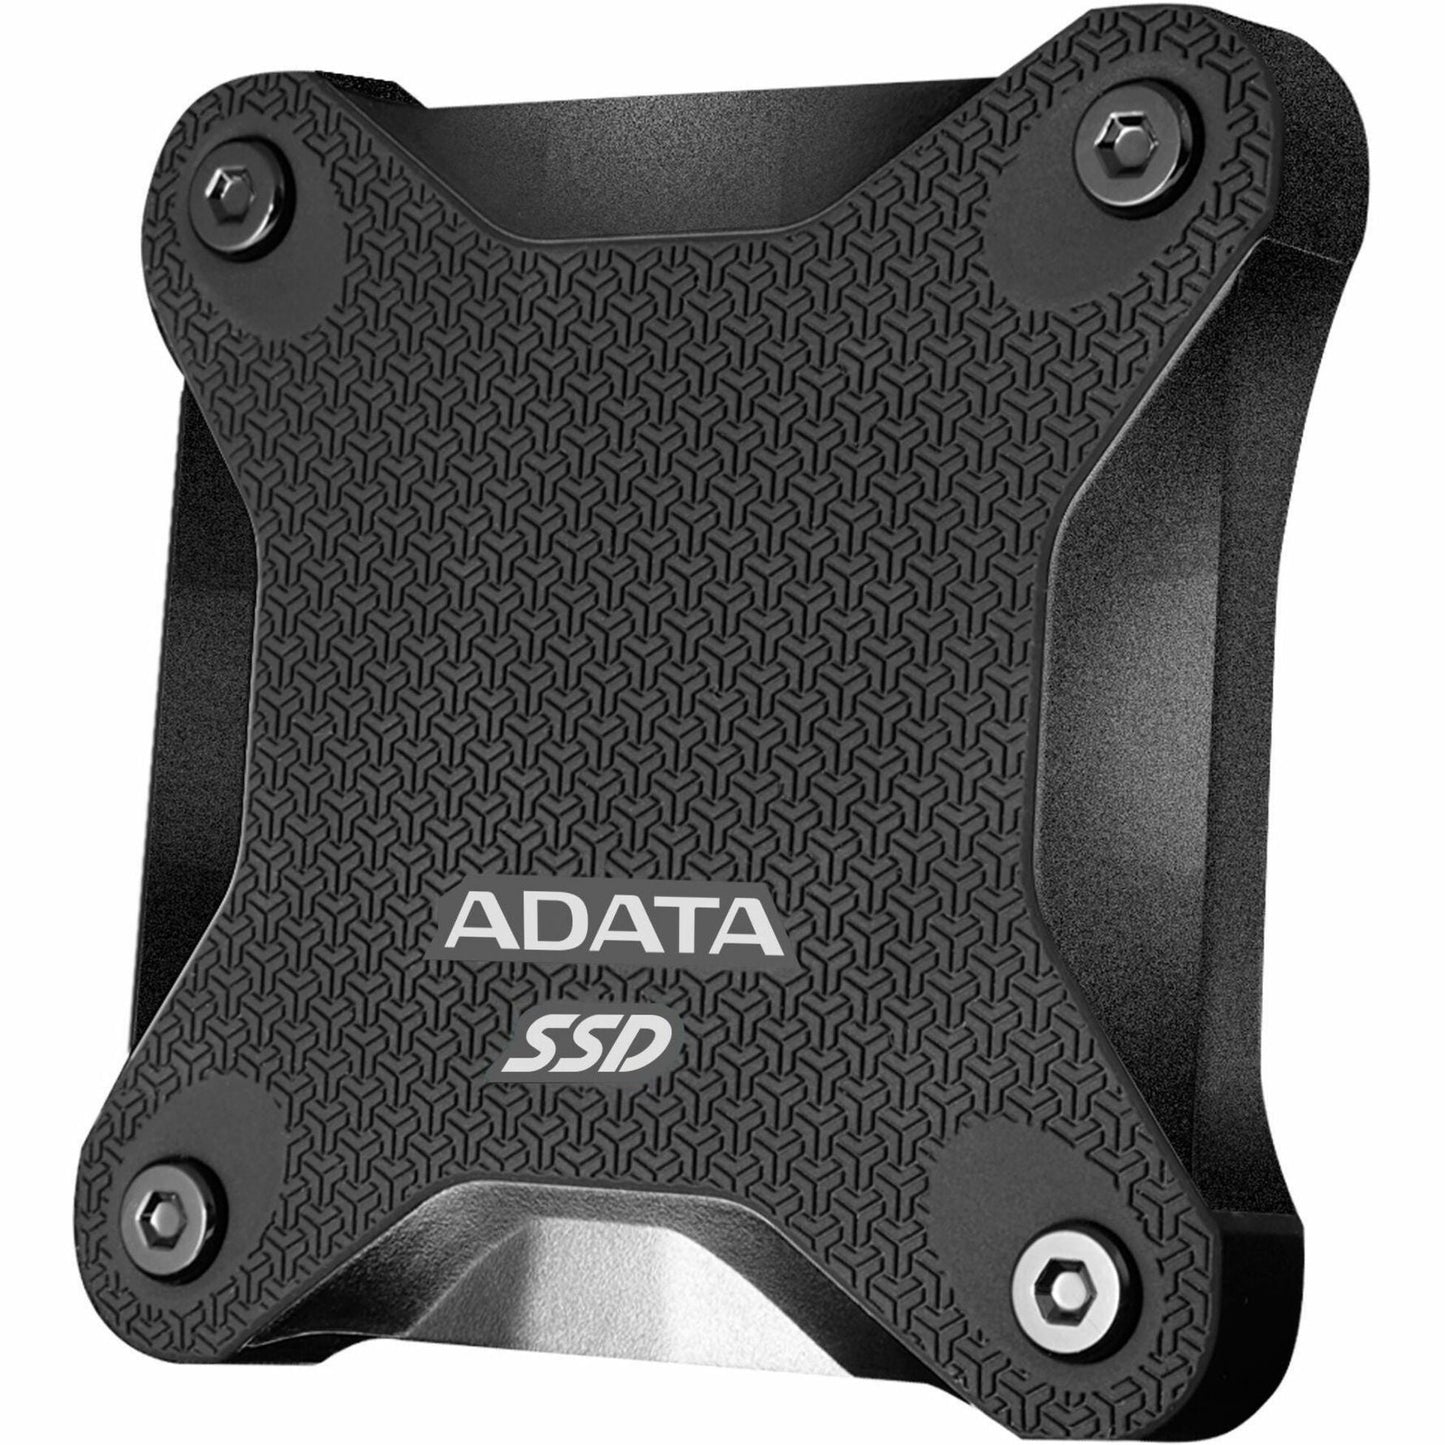 Adata SD600Q 480 GB Portable Solid State Drive - External - Black